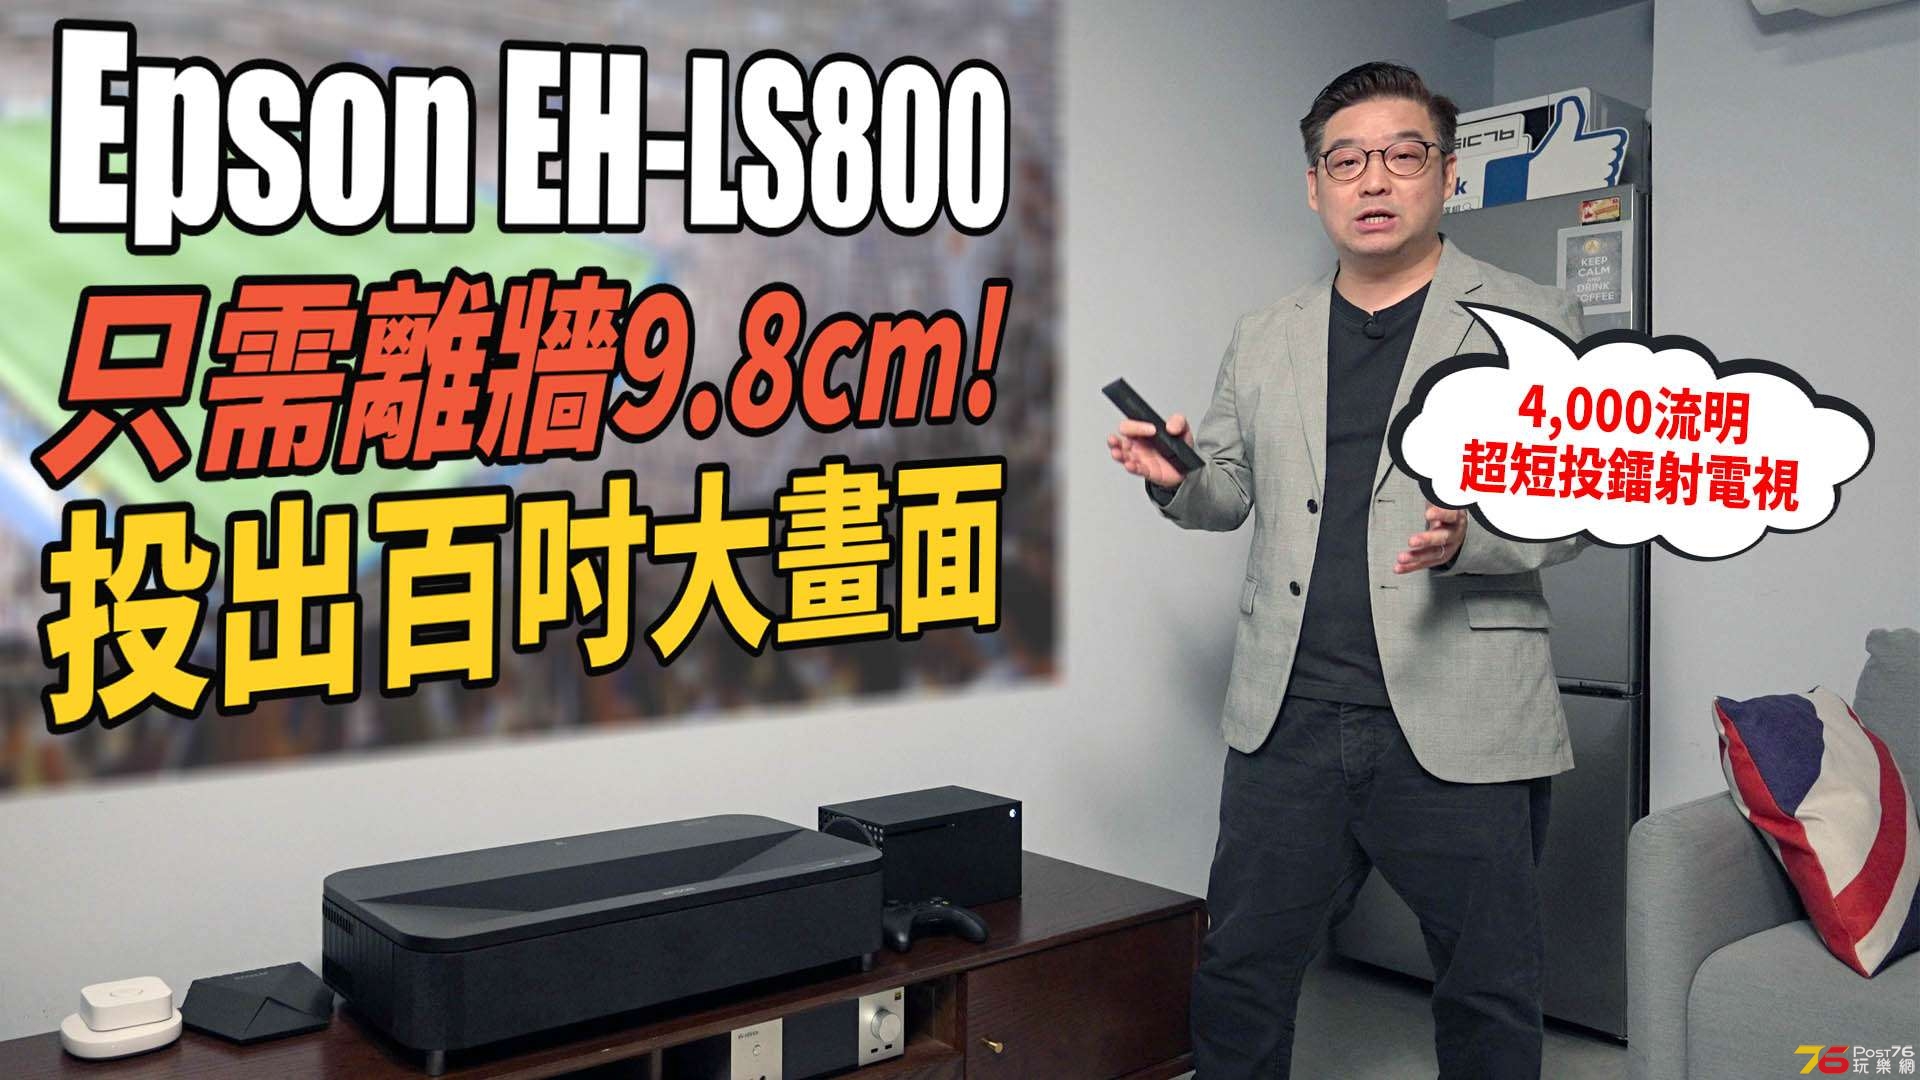 Epson LS800 Ultra Short-Throw Laser Projector review forum copy.jpg